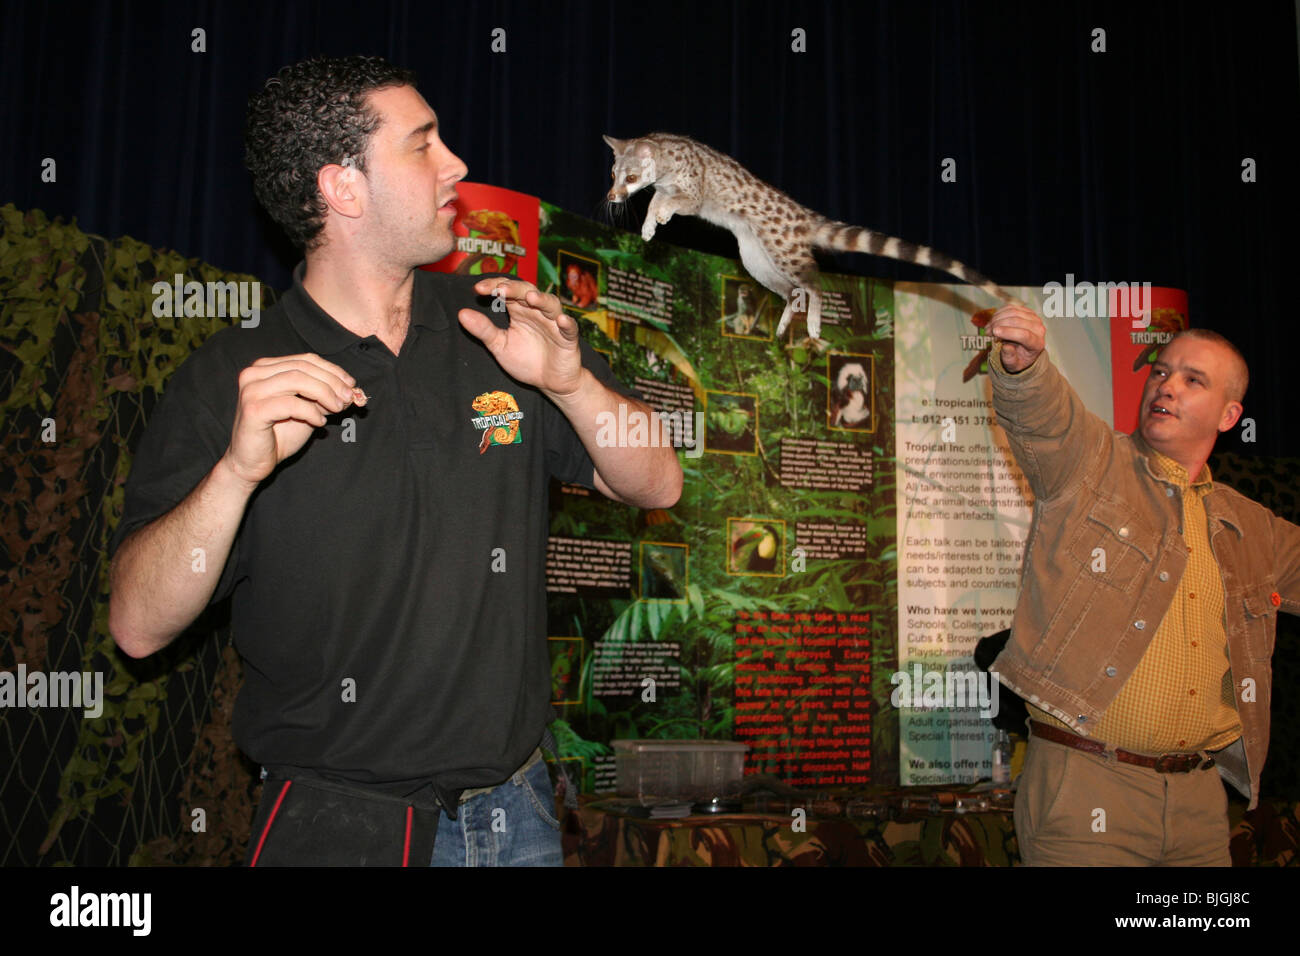 Museo presentazione della fauna selvatica da Tropical Inc mostra Genet Cat Jumping Foto Stock